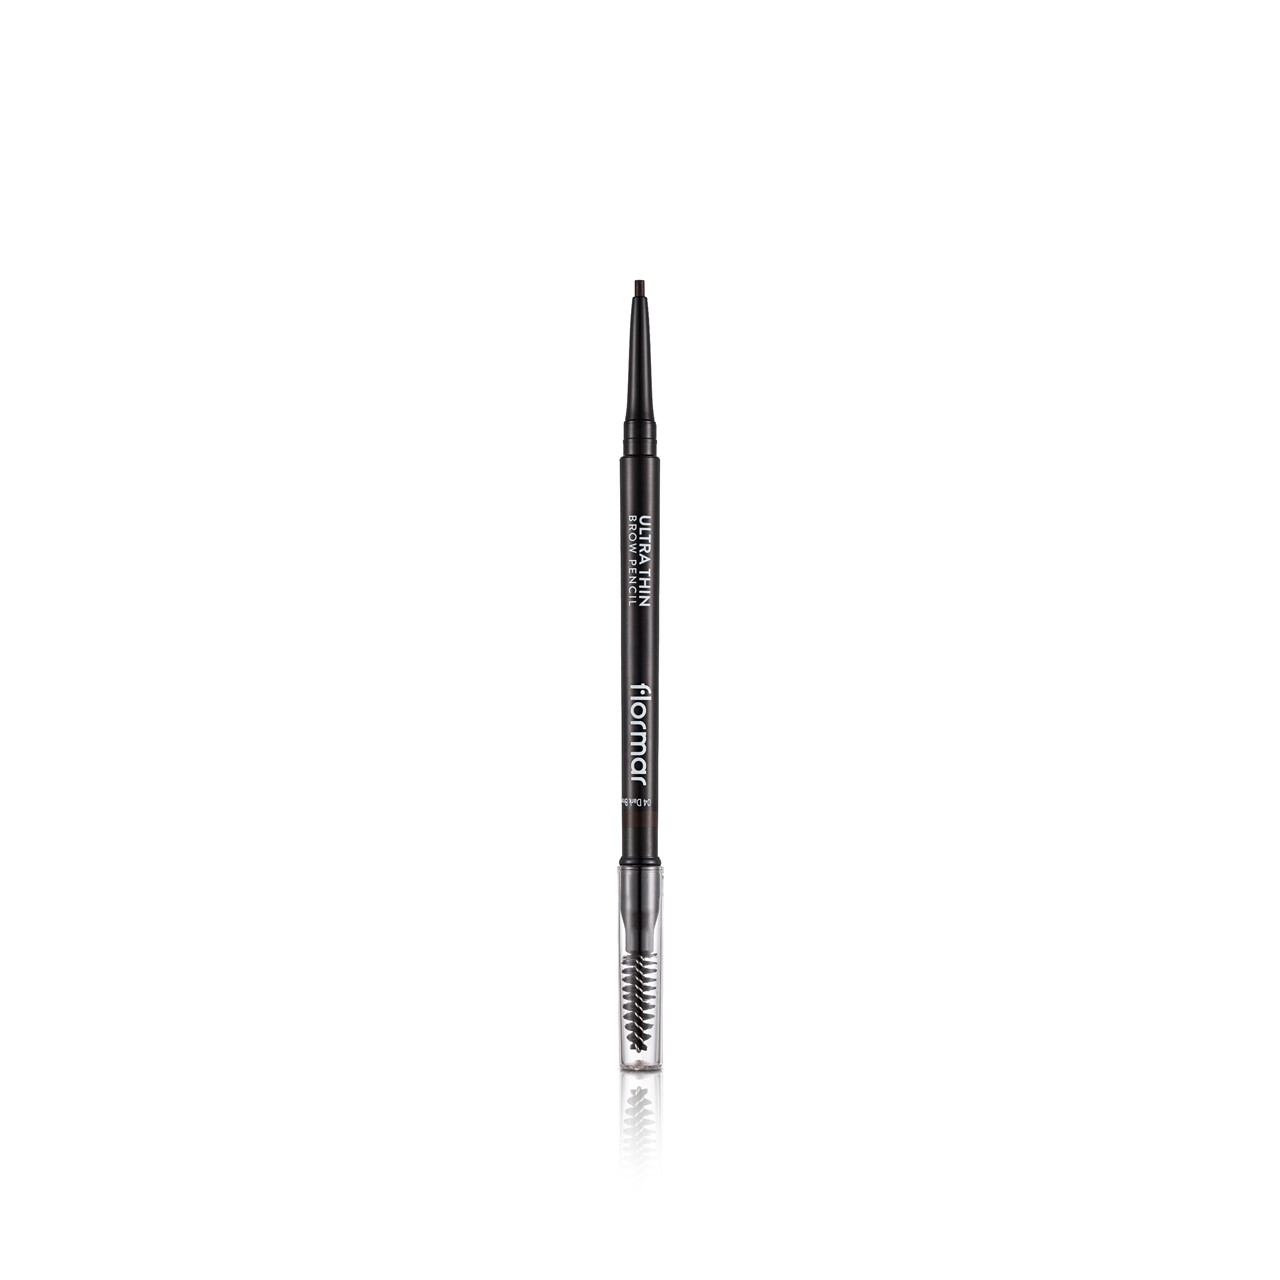 Flormar Ultra Thin Brow Pencil 04 Dark Brown 0.14g (0.005oz)